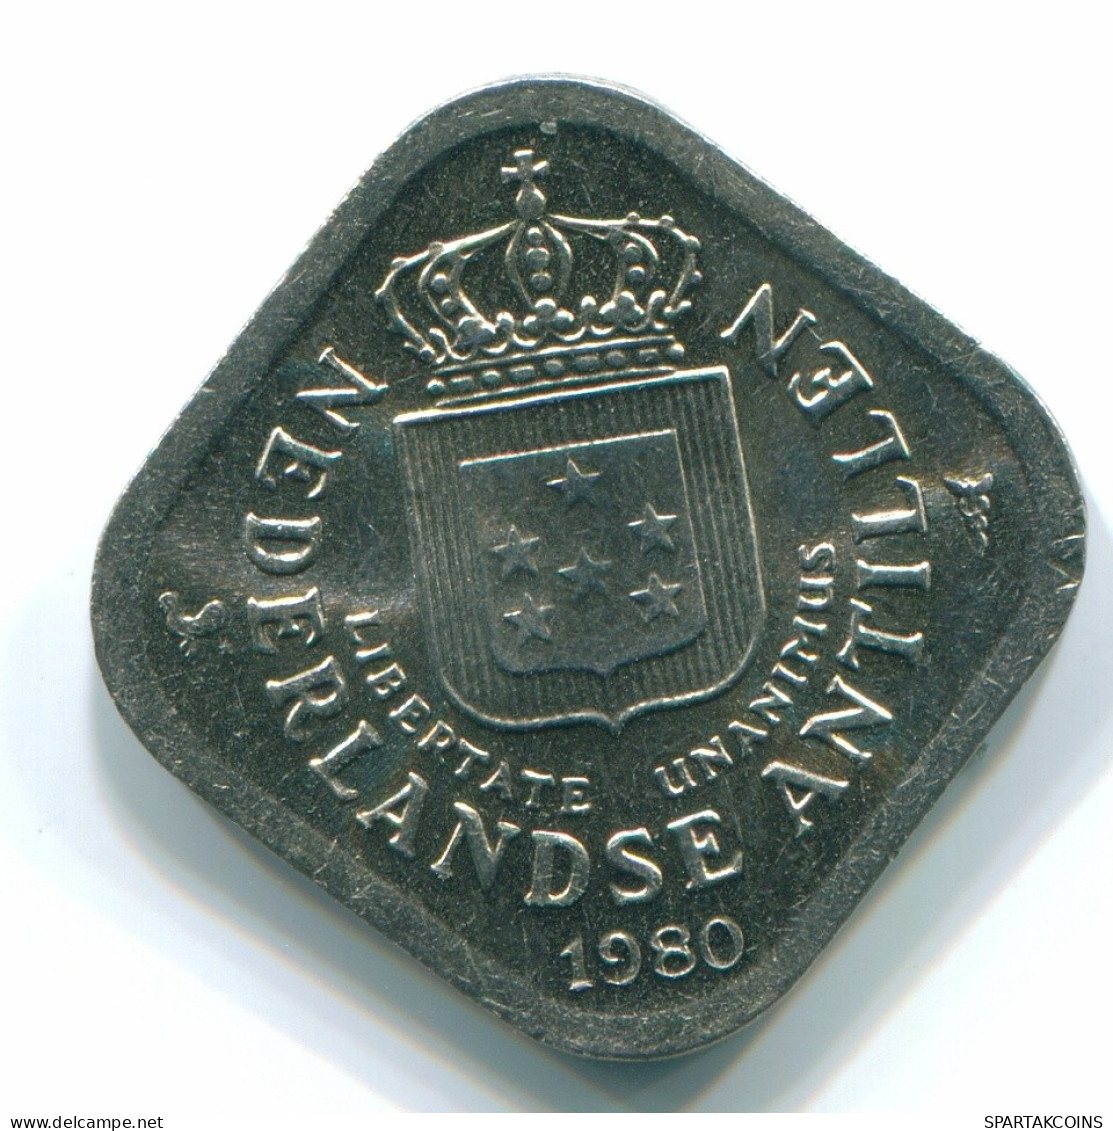 5 CENTS 1980 NETHERLANDS ANTILLES Nickel Colonial Coin #S12300.U.A - Nederlandse Antillen